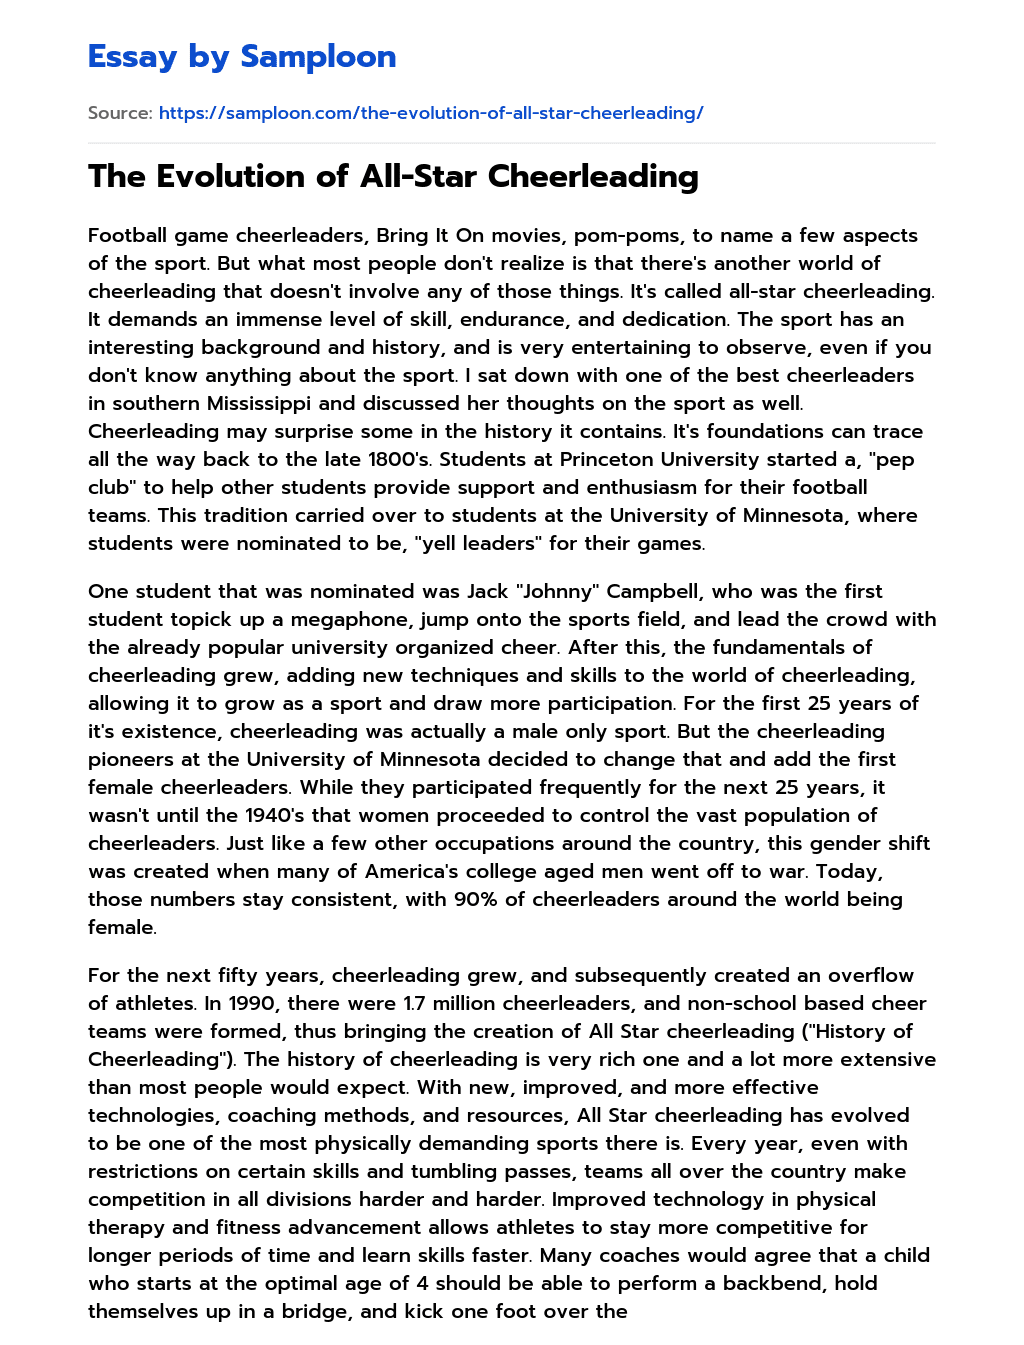 The Evolution of All-Star Cheerleading essay